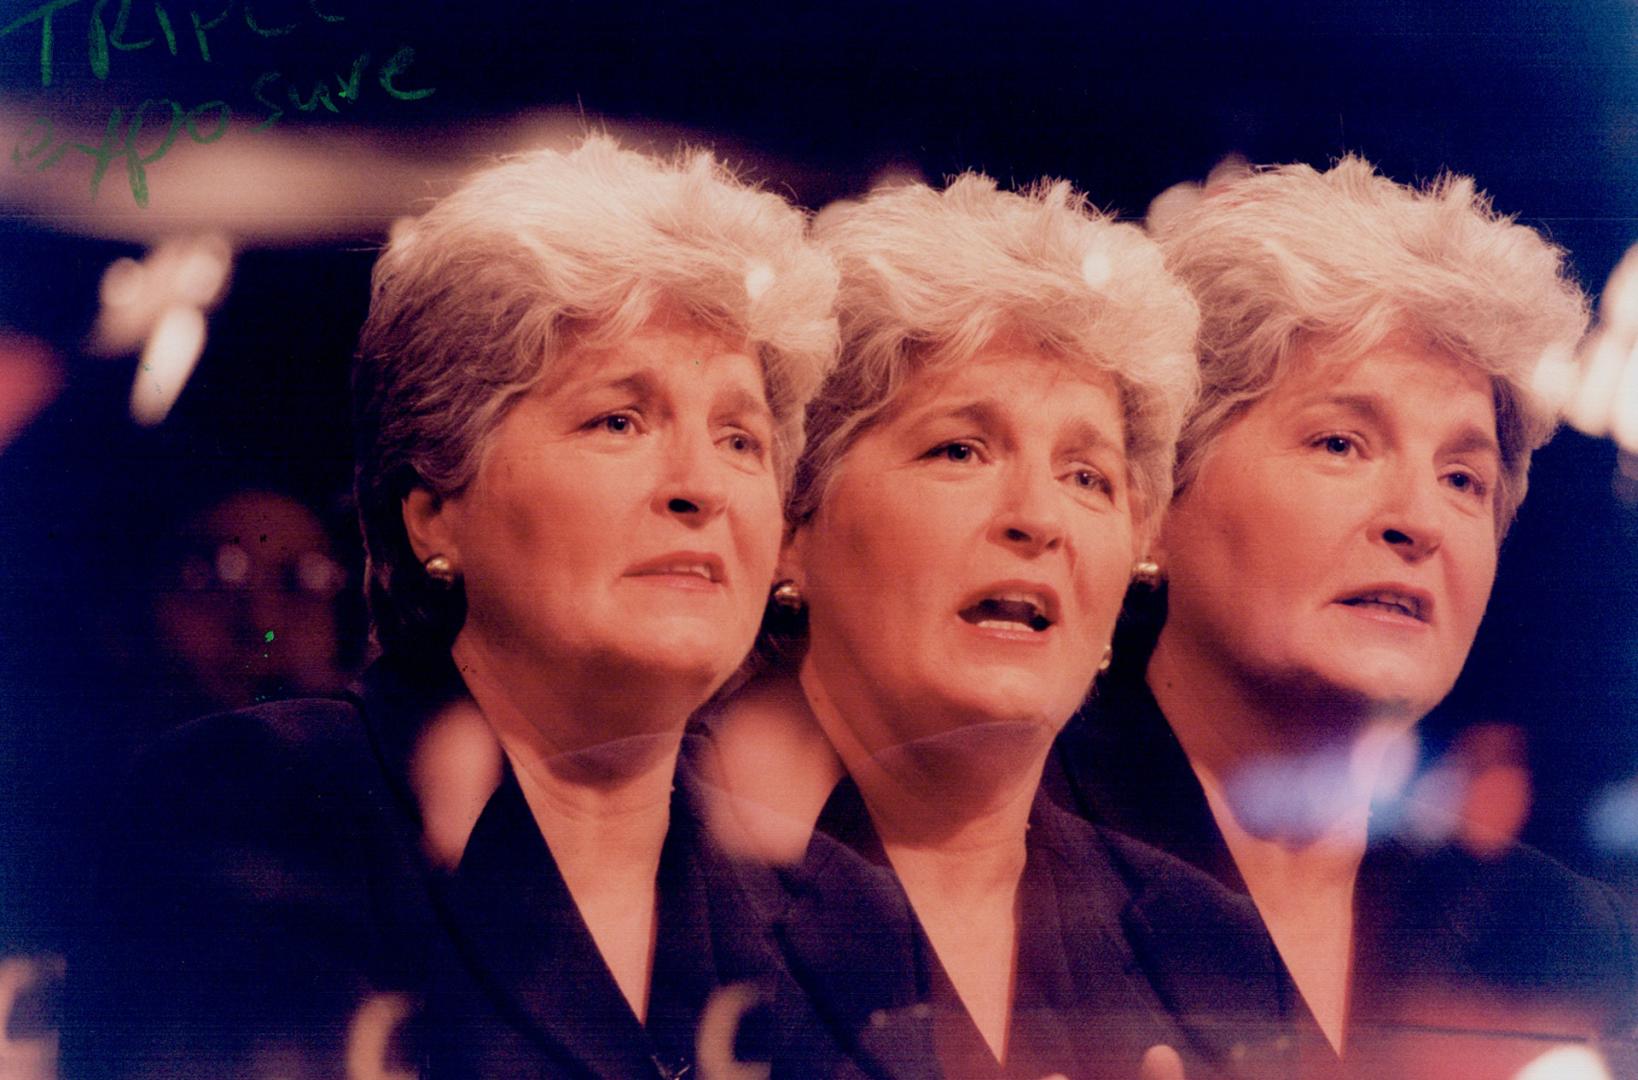 Hall, Barbara - Election Campaign '97